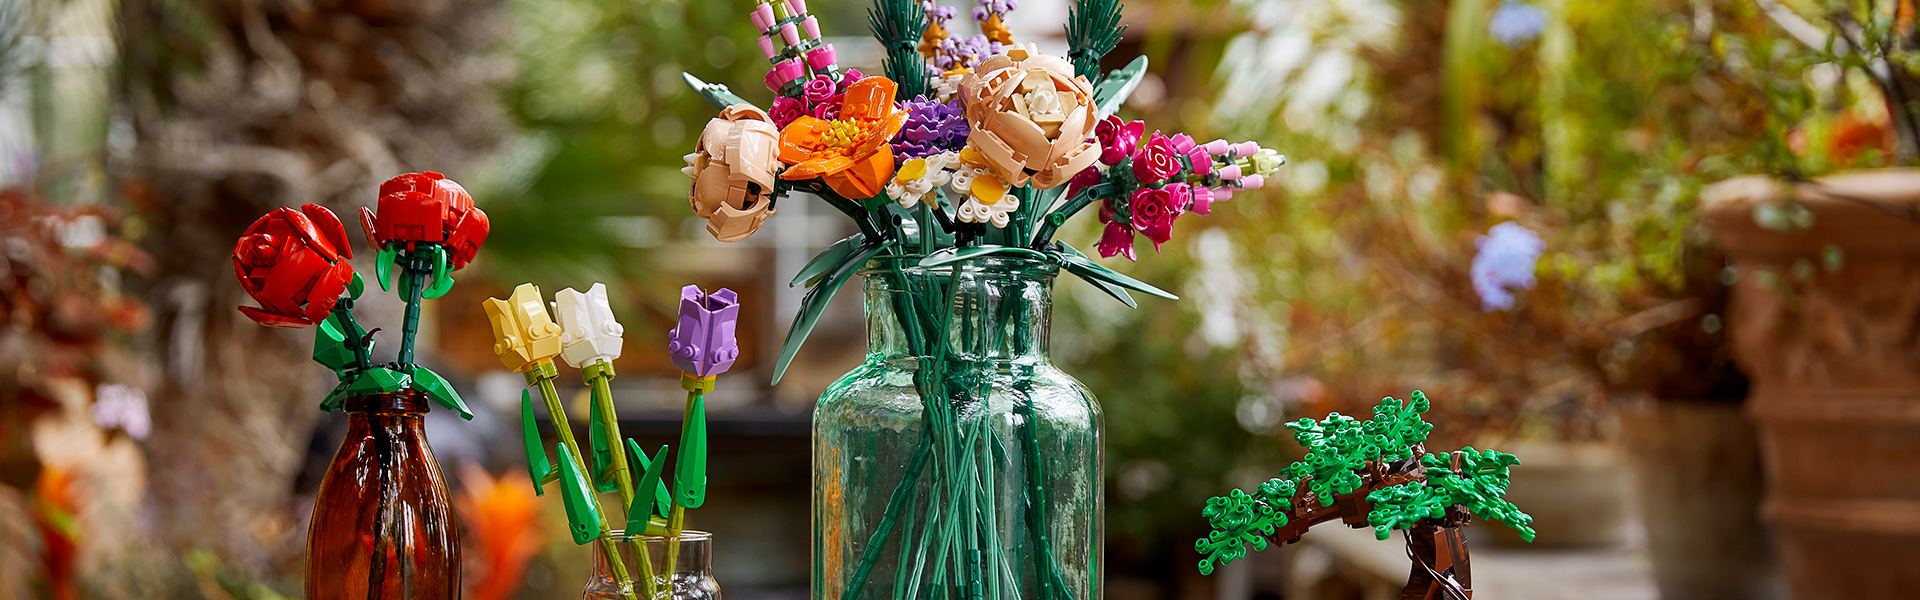 lego bouquet of flowers - news - goodhomesmagazine.com